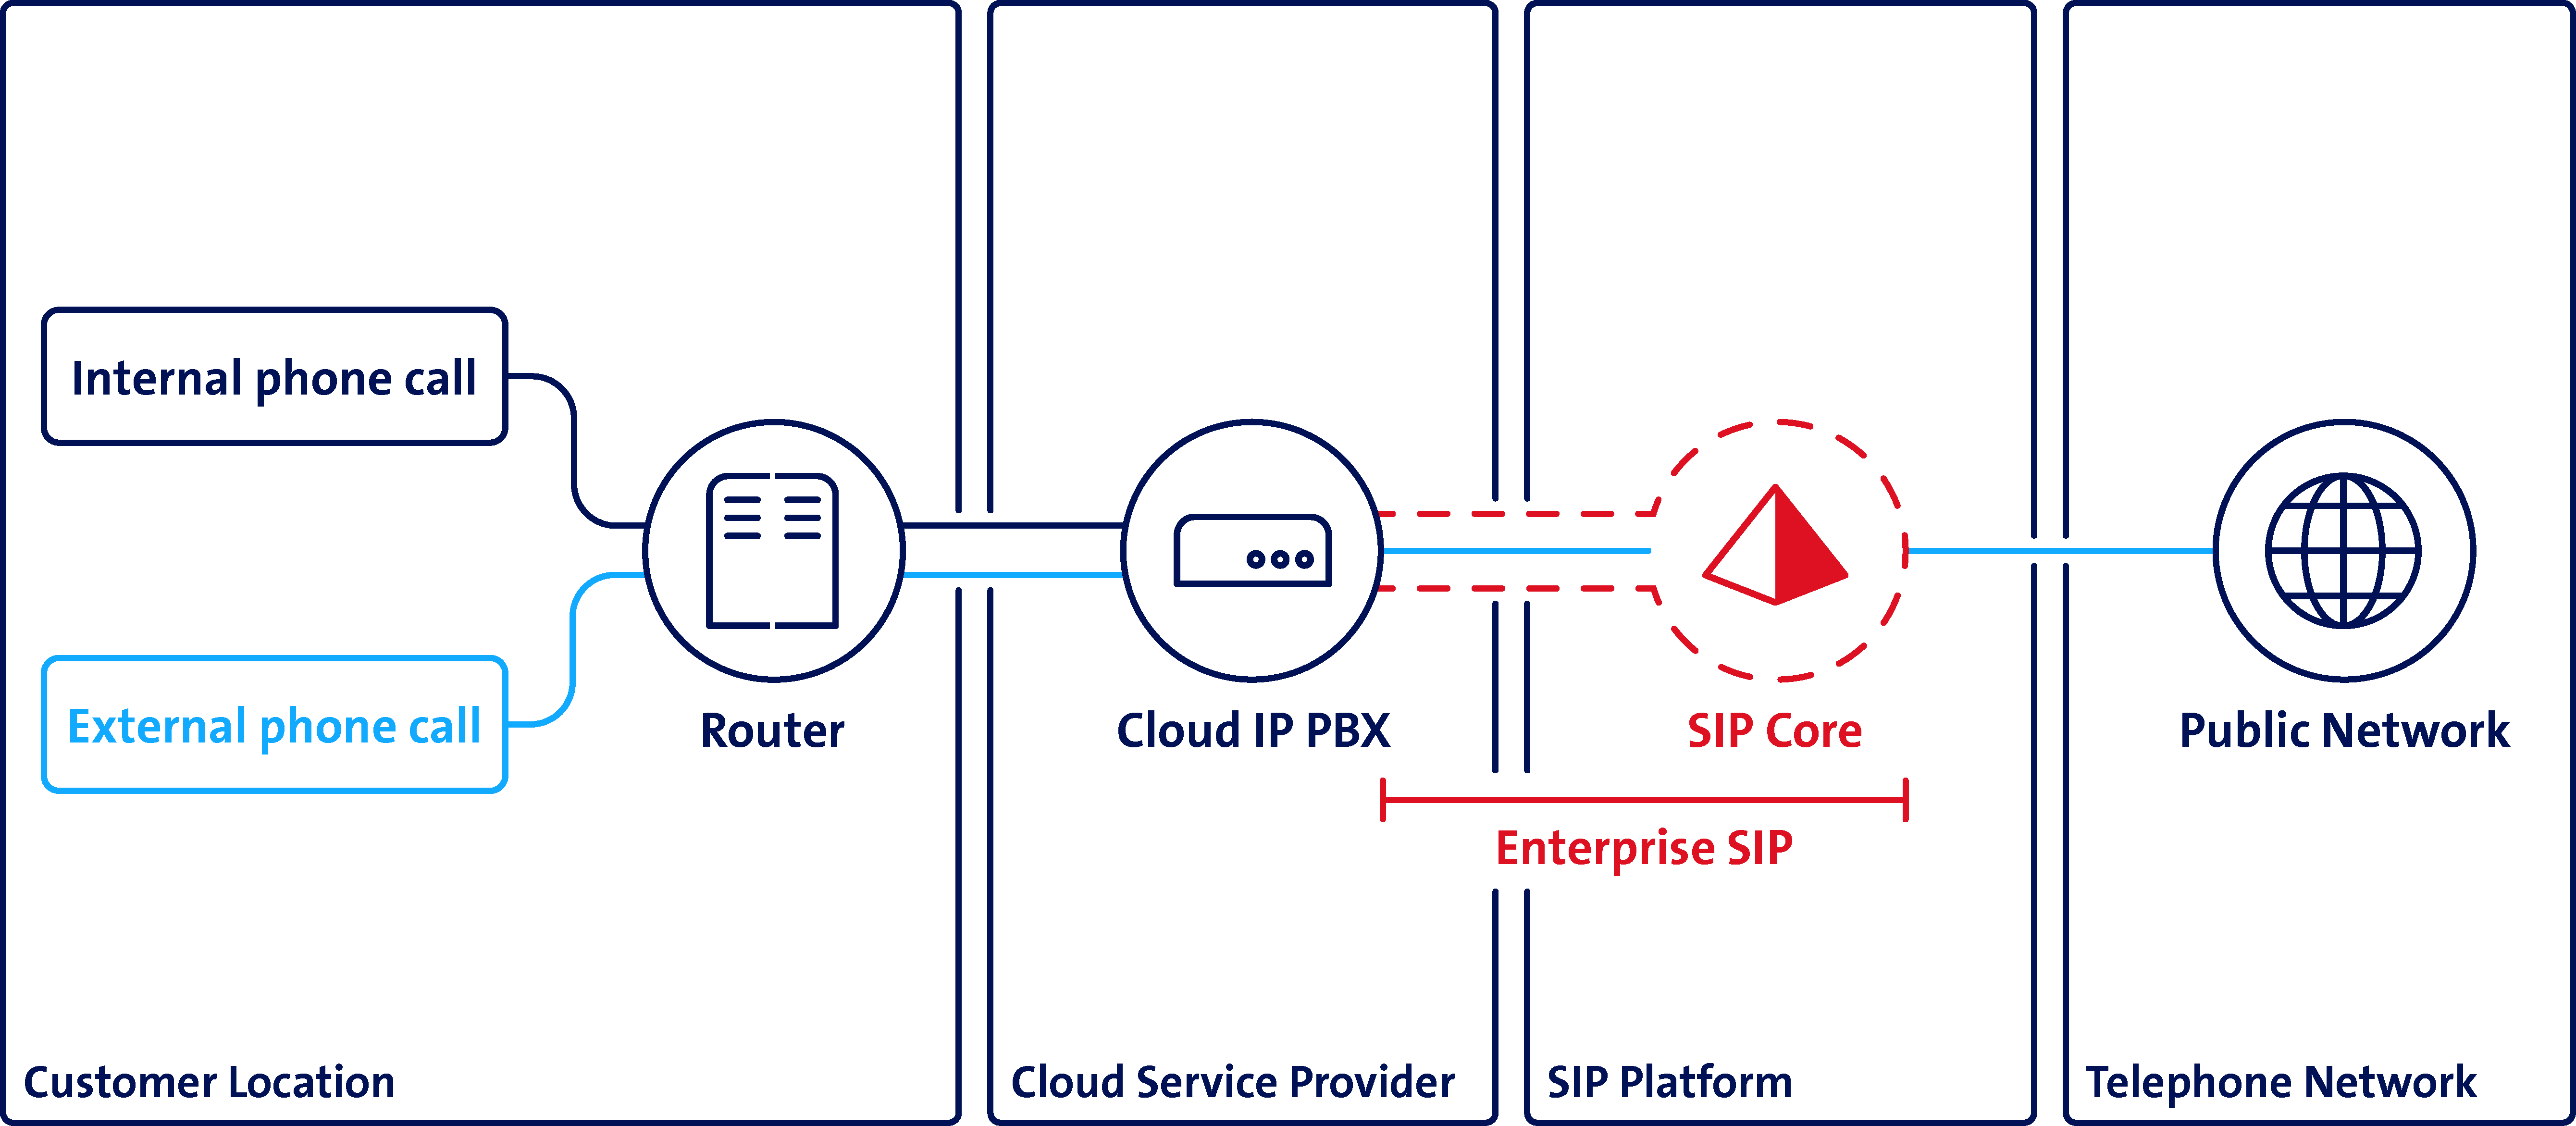 Enterprise SIP Cloud: collegamento del vostro PBX su cloud MS Teams alla rete telefonica pubblica. 